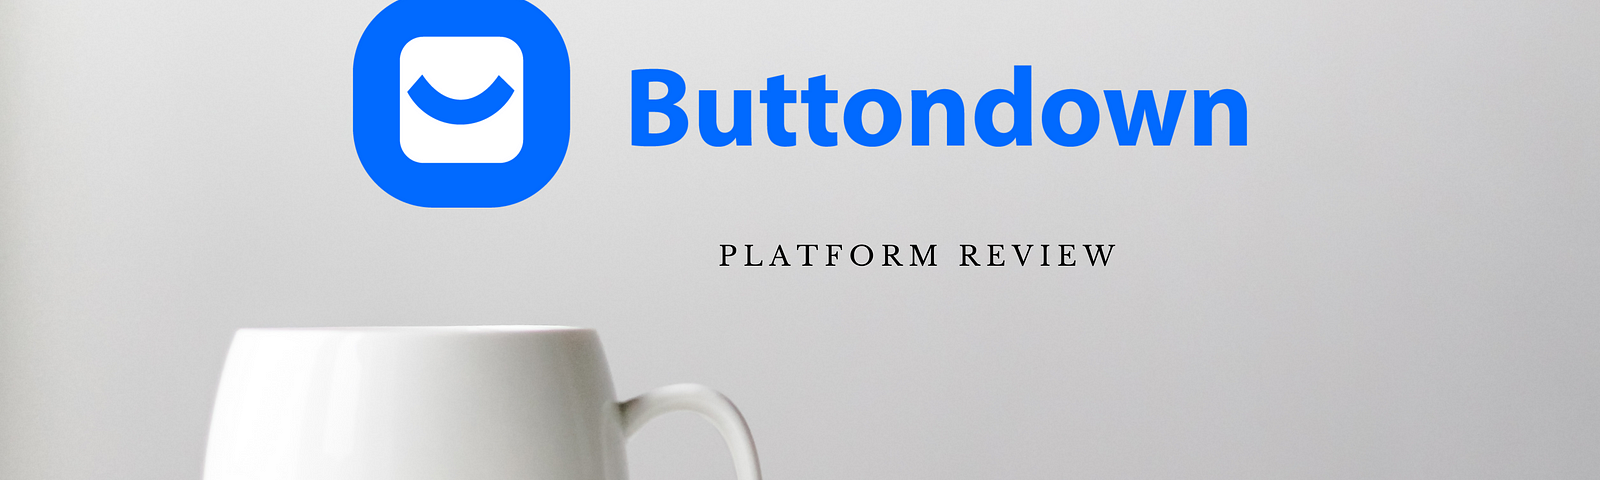 buttondown review, buttondown newsletter, button down vs substack, buttondown newsletter review, buttondown vs mailchimp